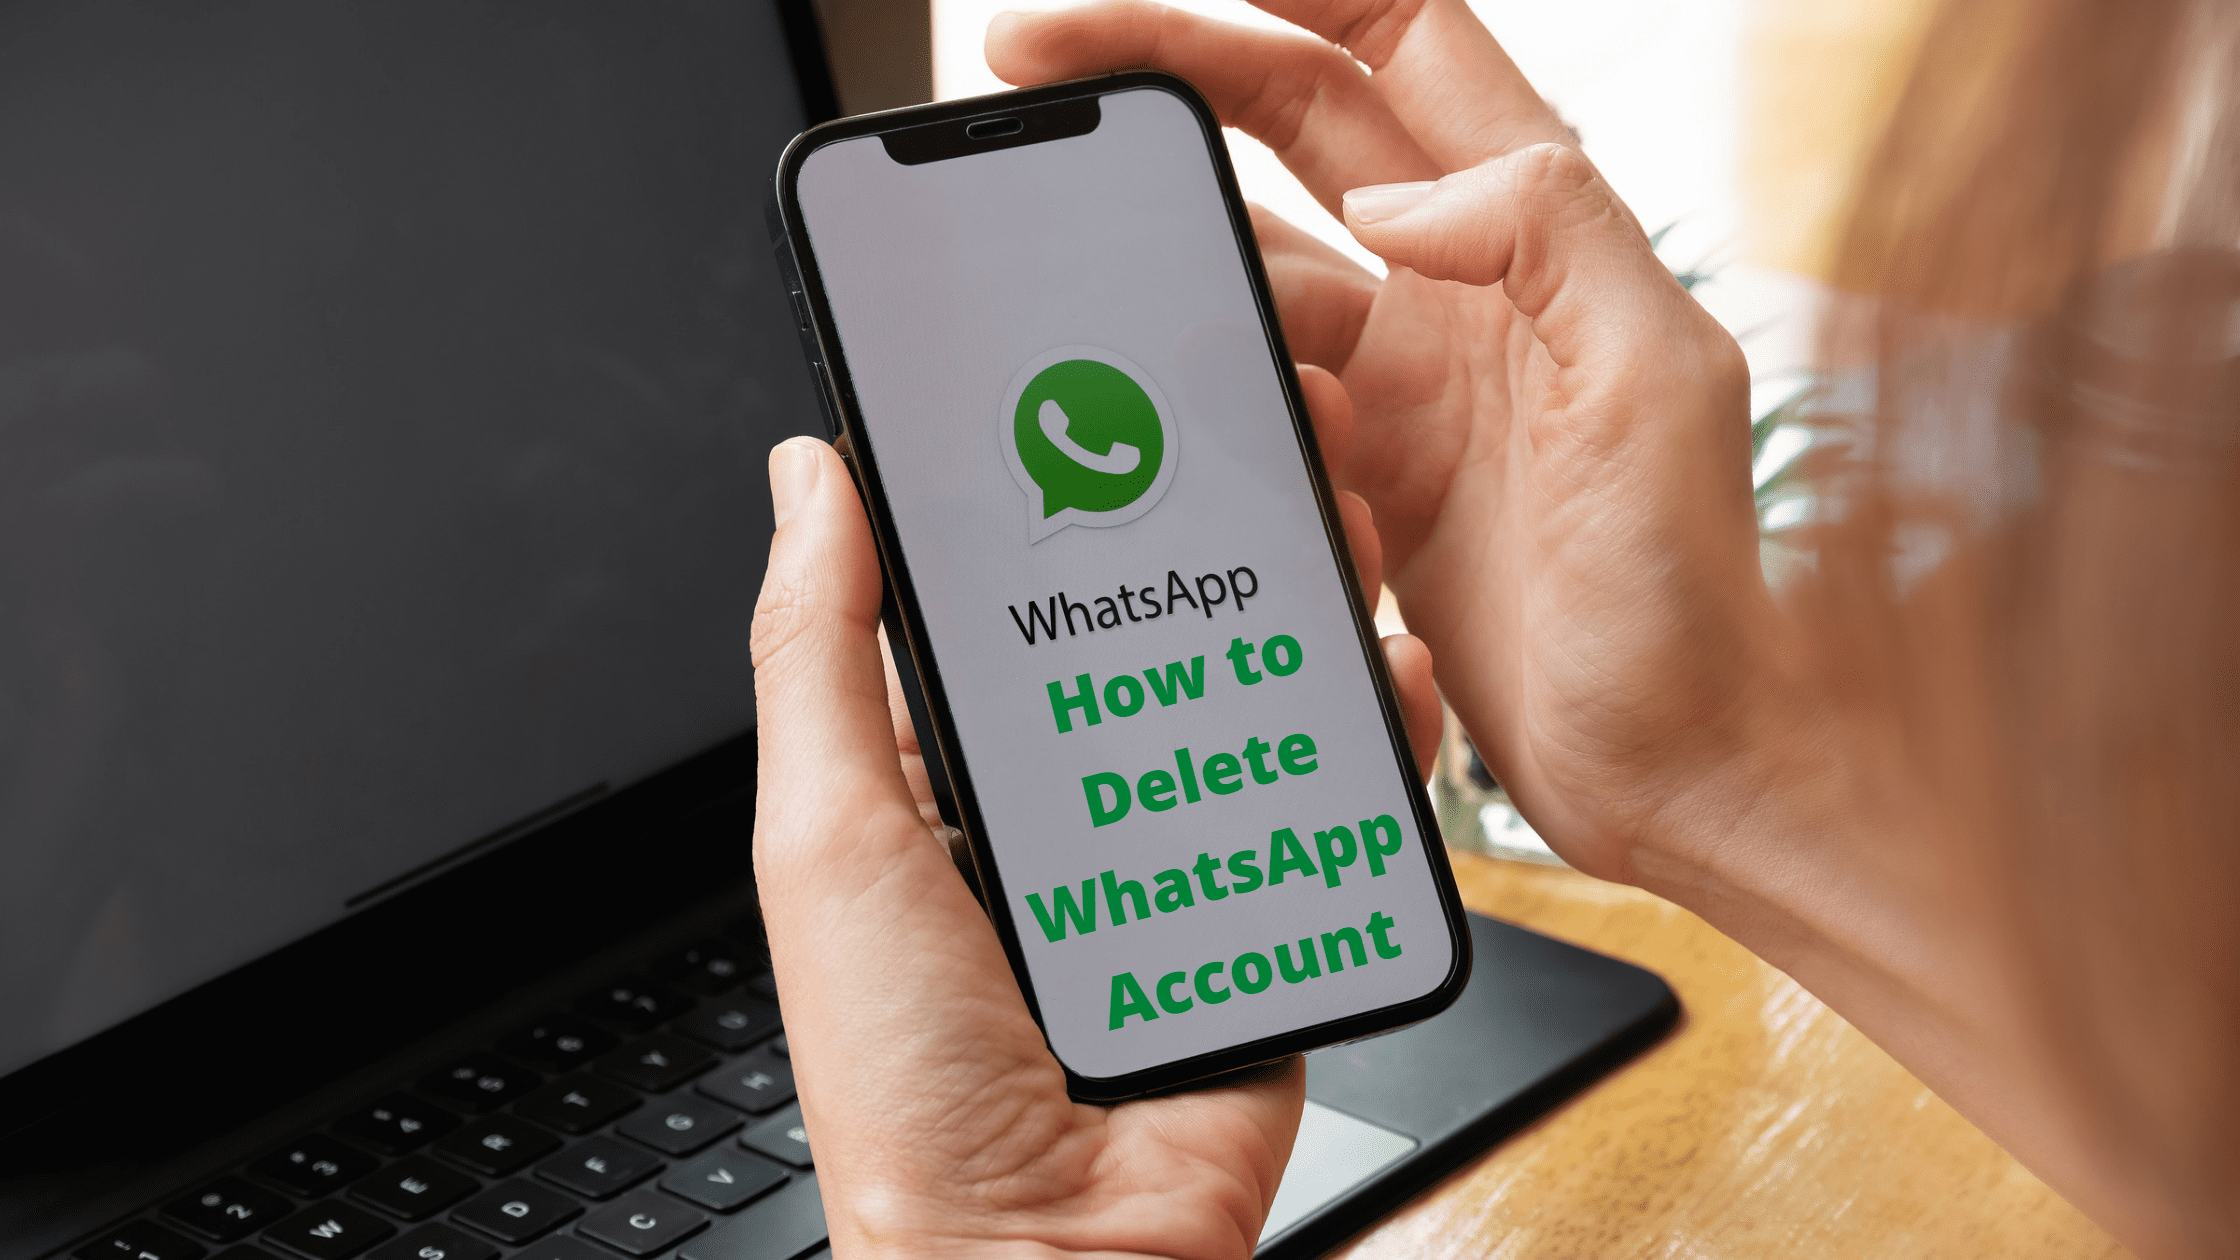 How to delete WhatsApp account?